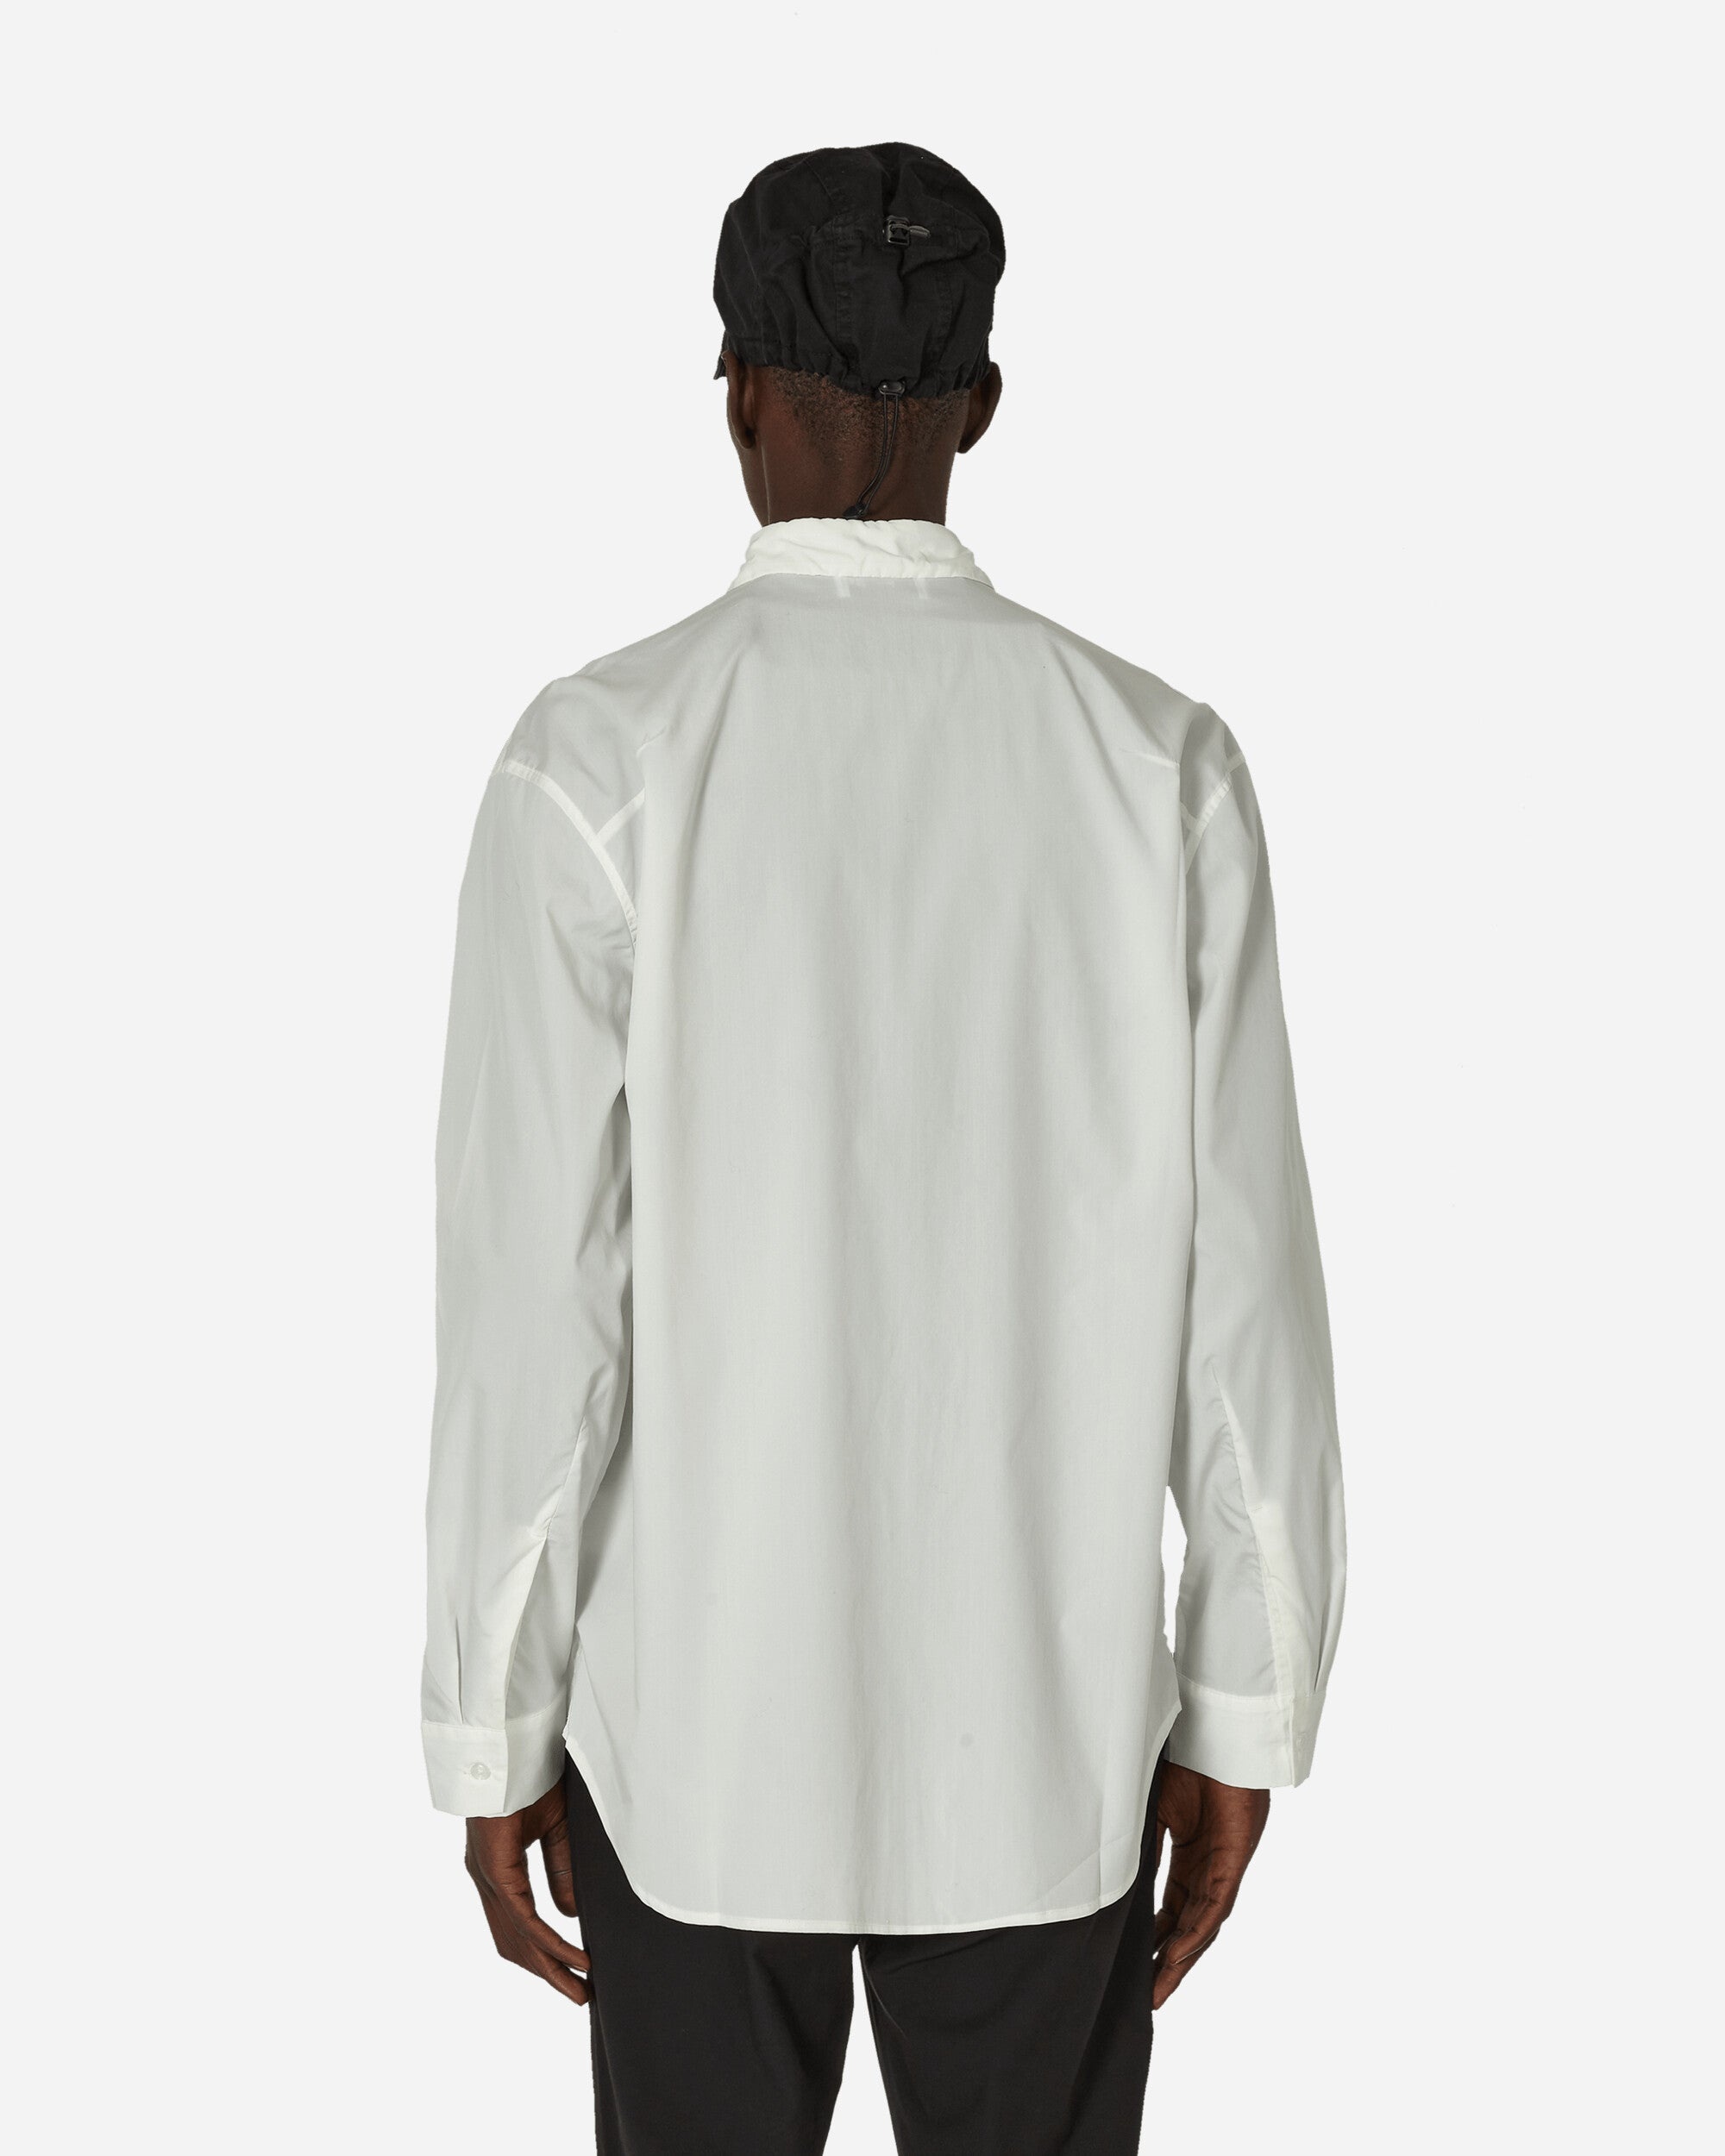 5.1 Shirt (Right) White - 3